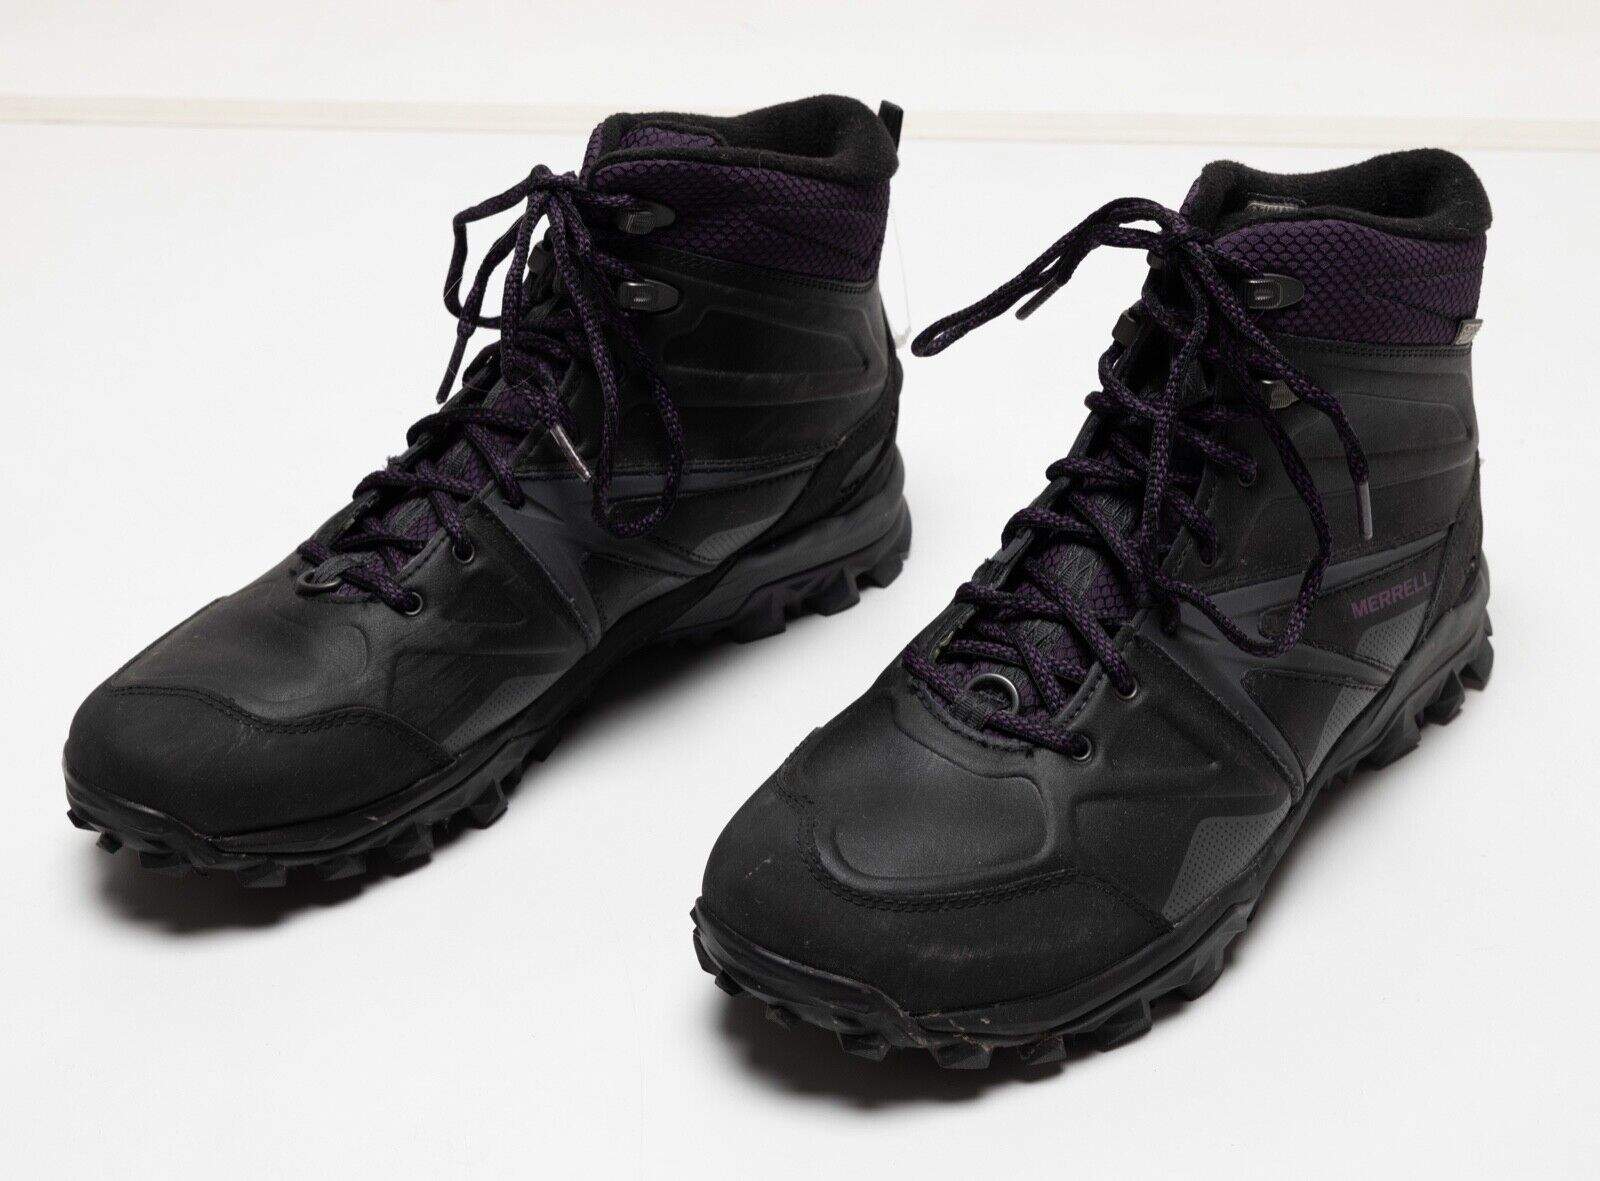 Women's Merrell Capra Glacial Ice Mid Winter Hiking Boots Shoes Waterproof 11 eBay